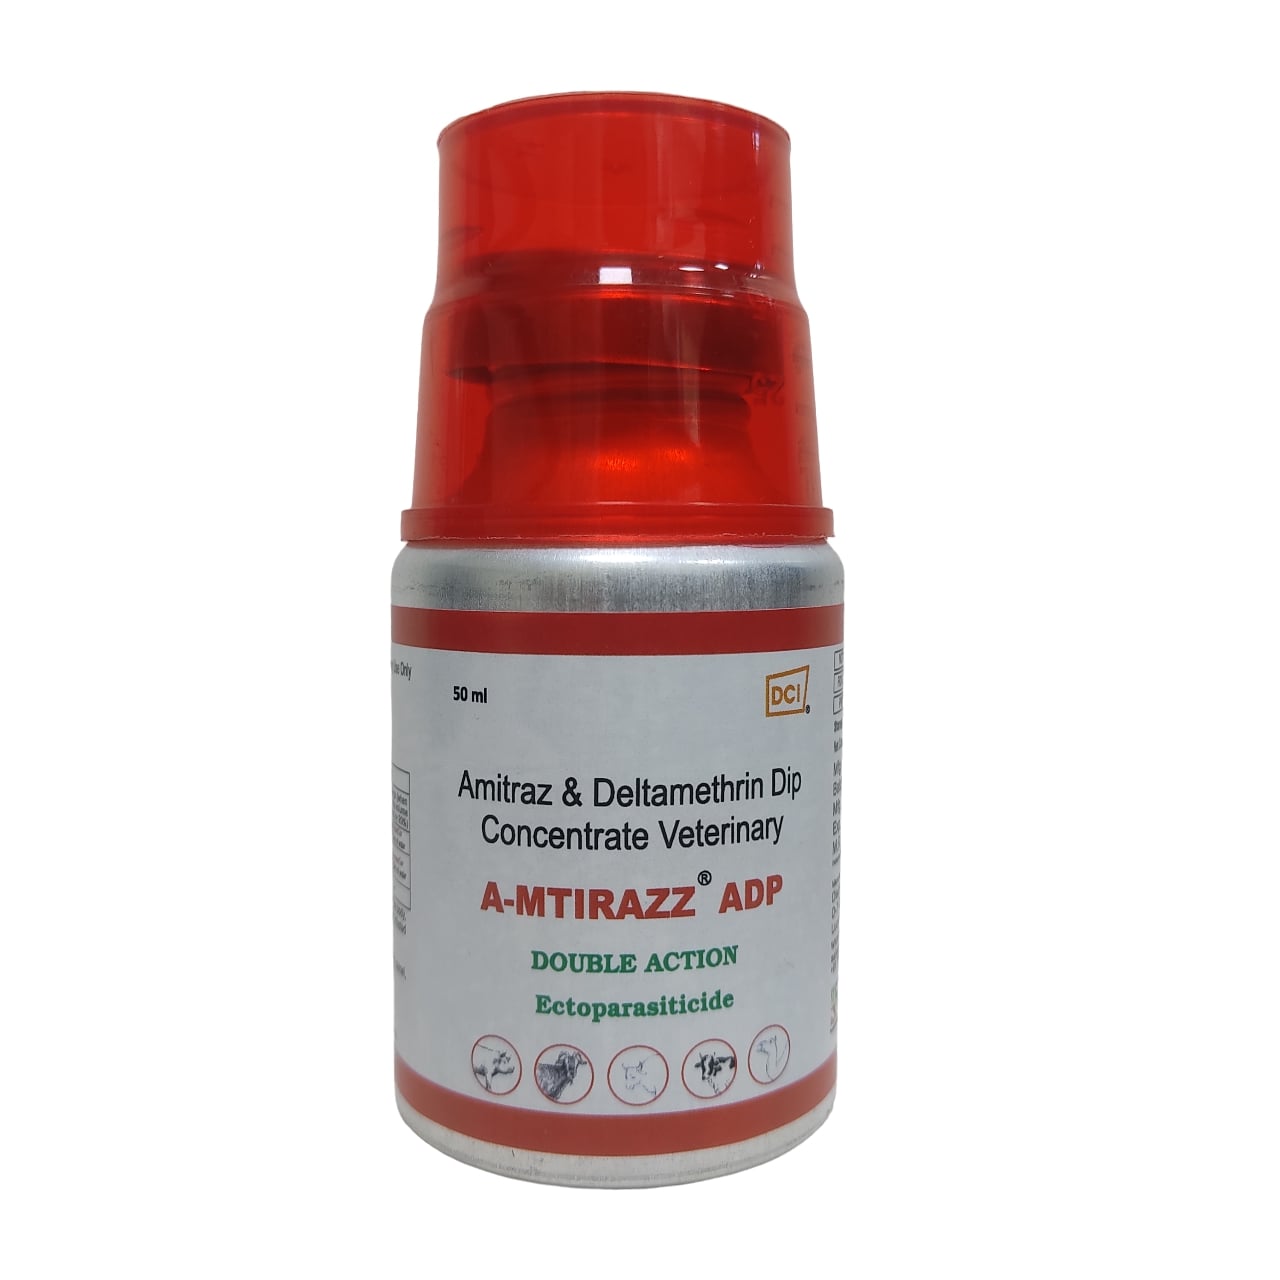 A-mtirazz ADP, Amitraz and Deltamethrin Concentrated Solution Liquid, 50 ml